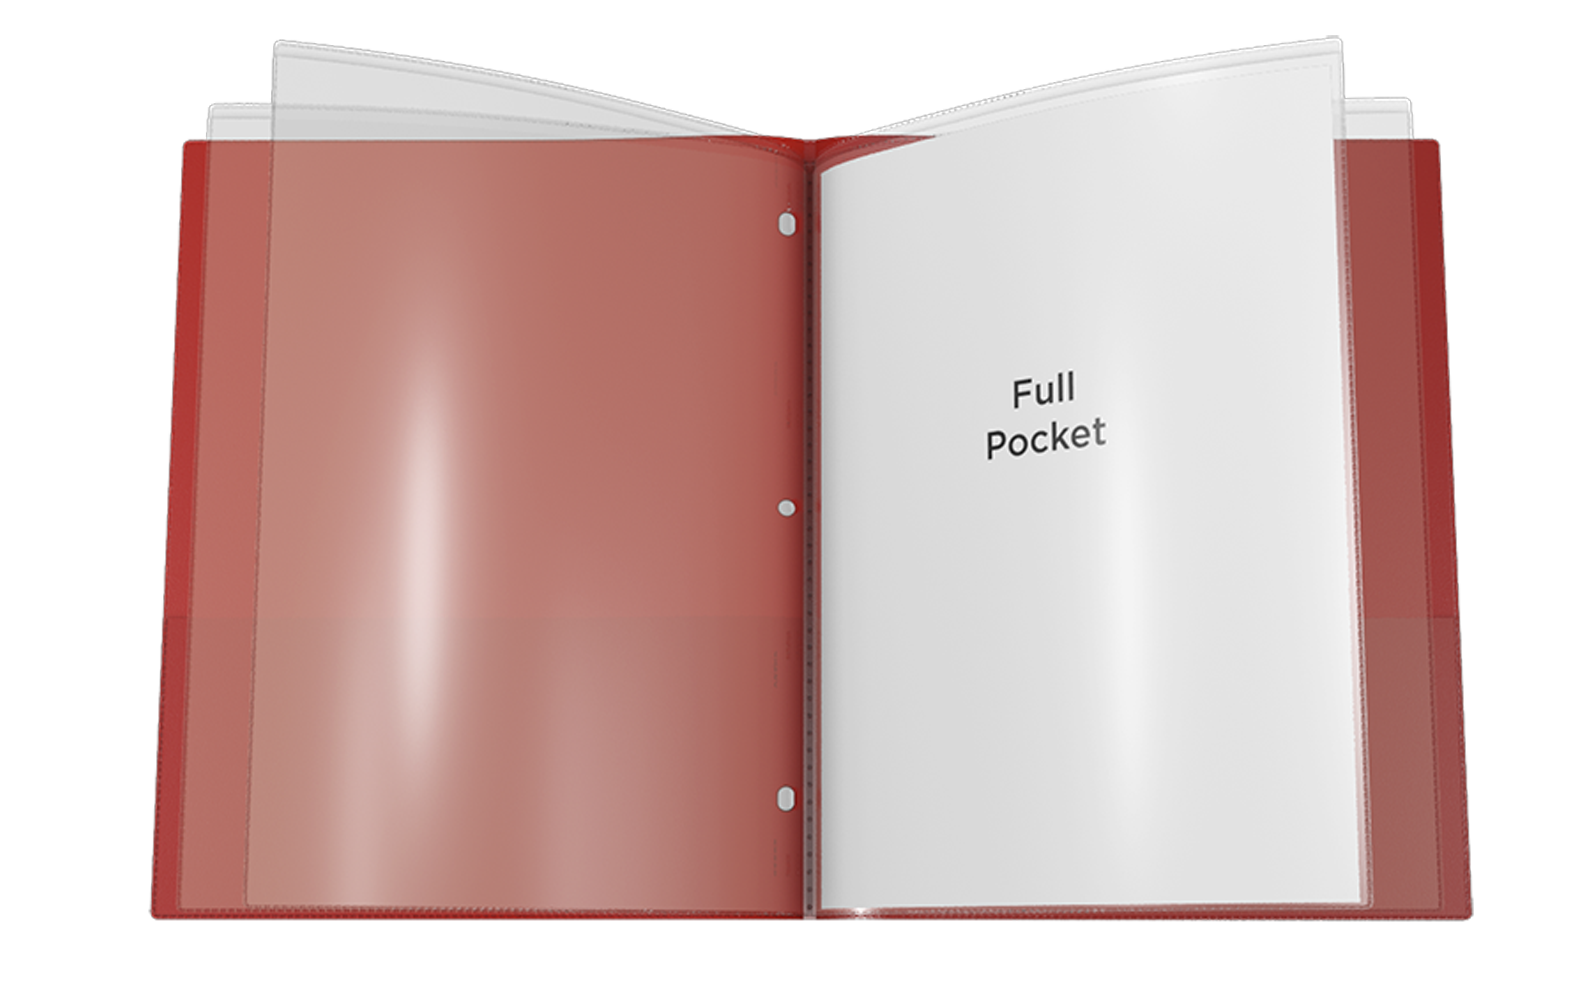 Inside view of Nicky's 6 Multi Pocket Sleeves Folder used for presentation.